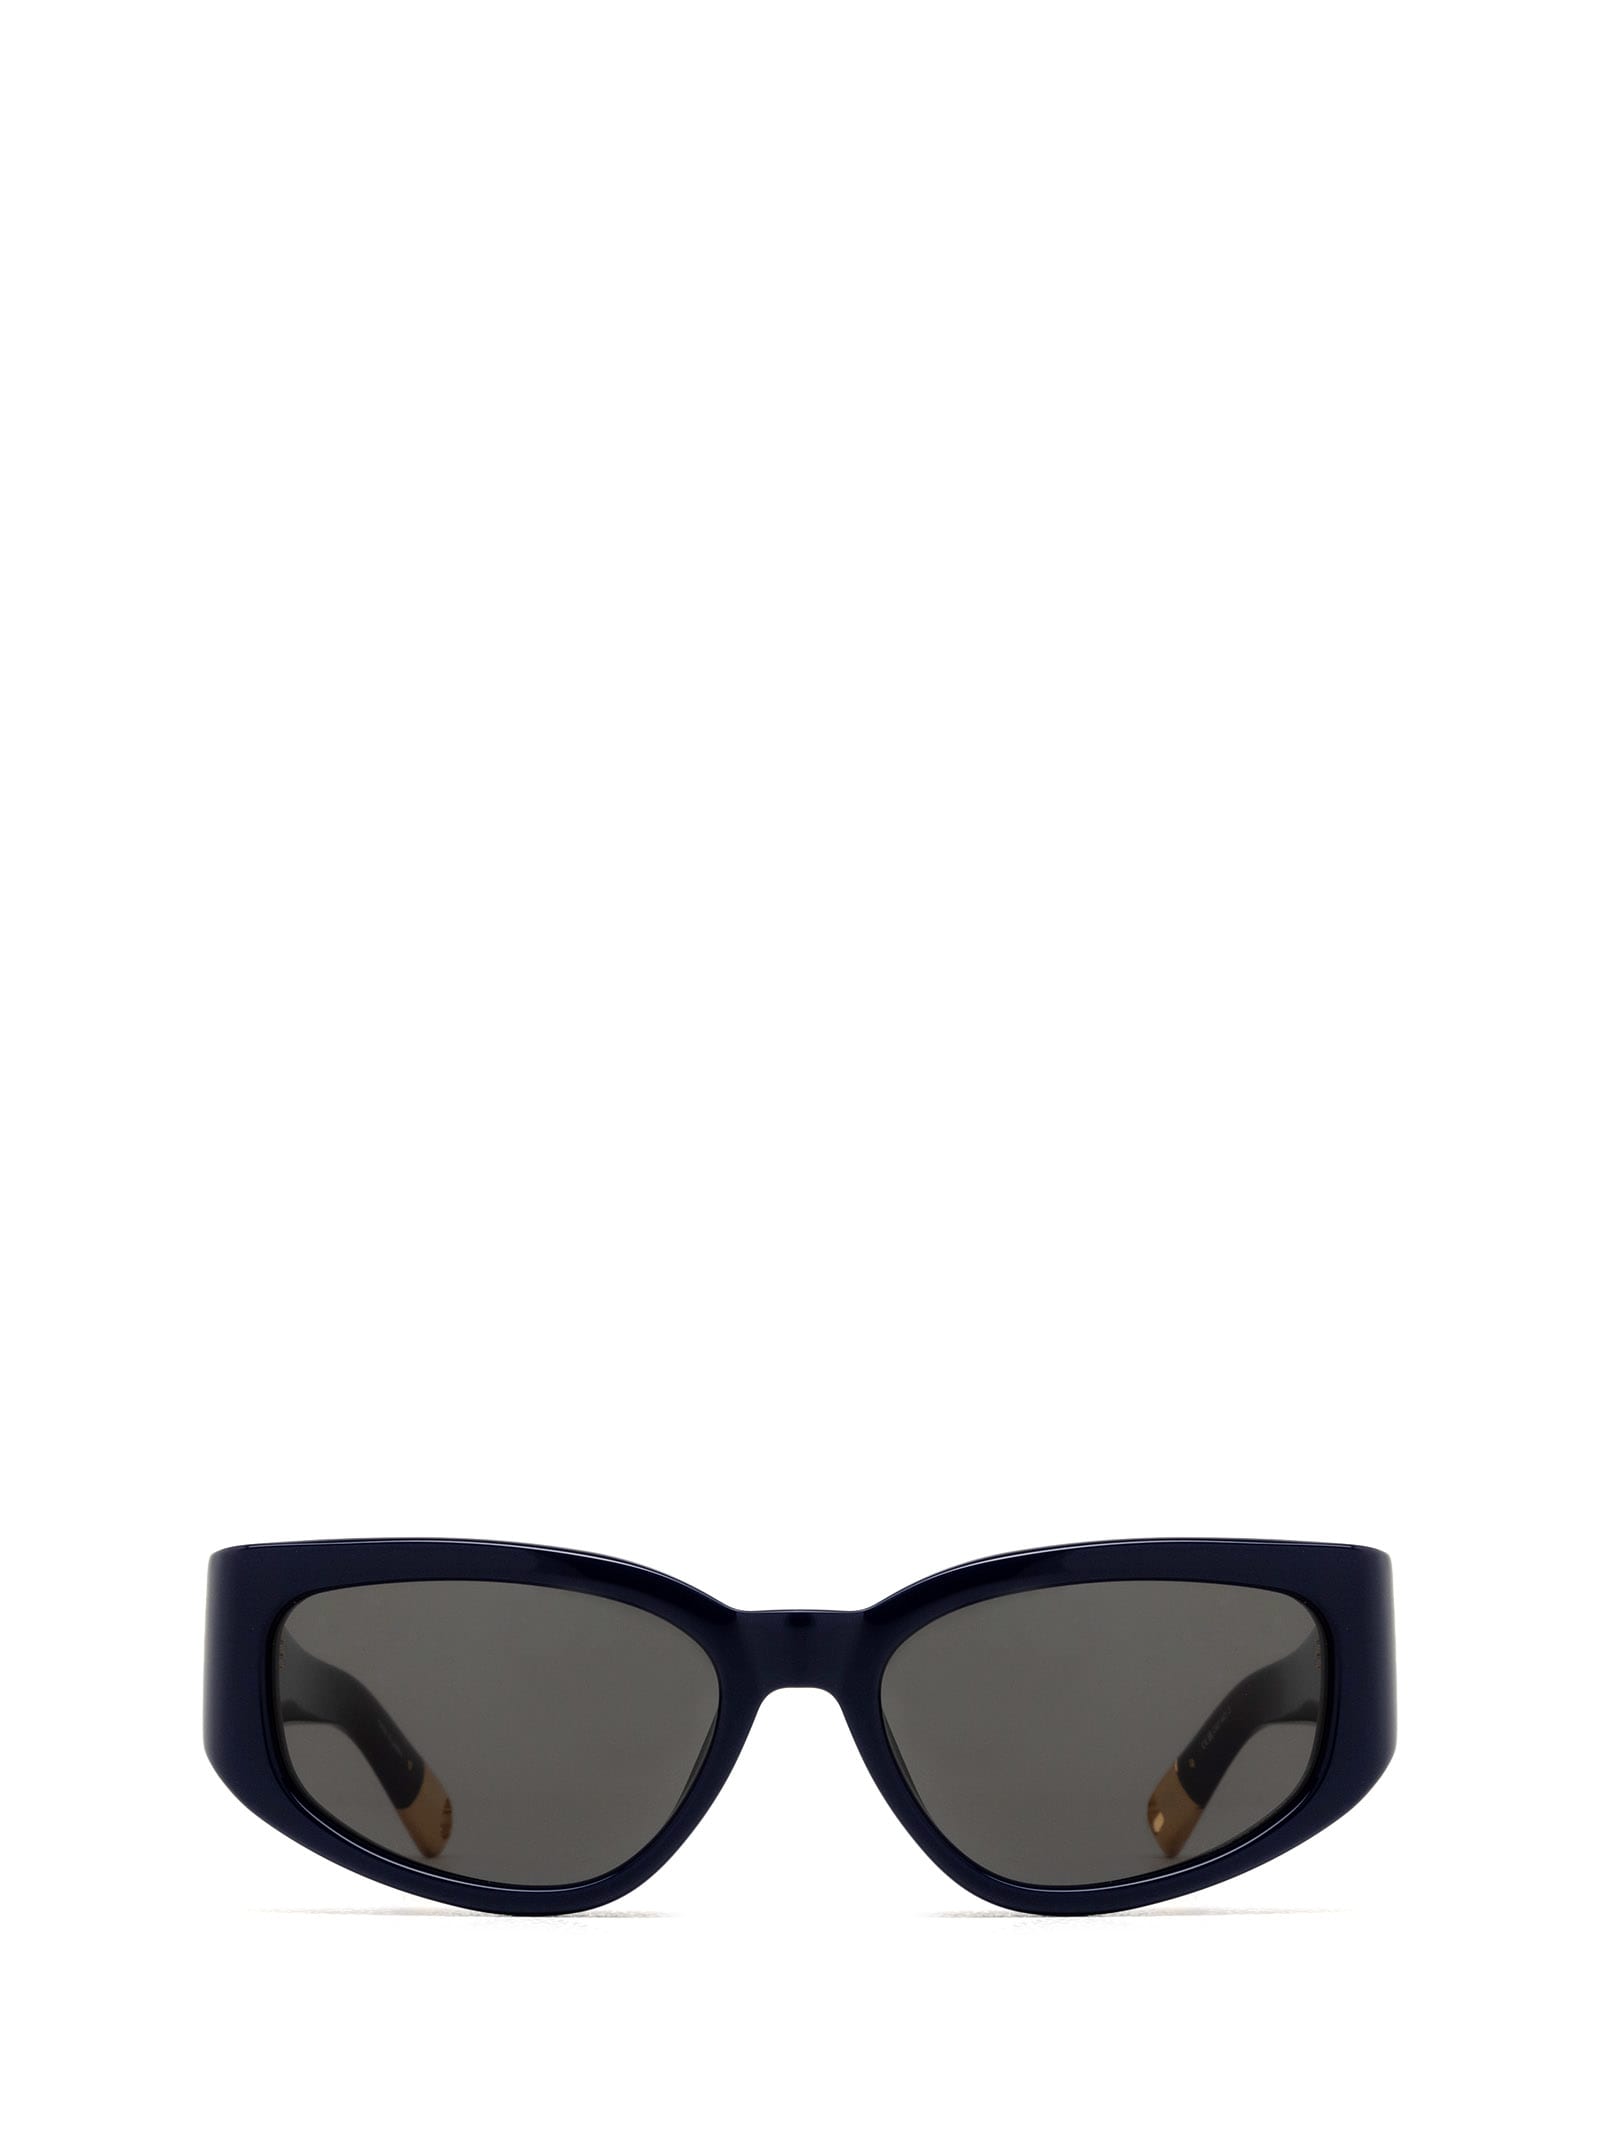 Jac5 Navy Sunglasses